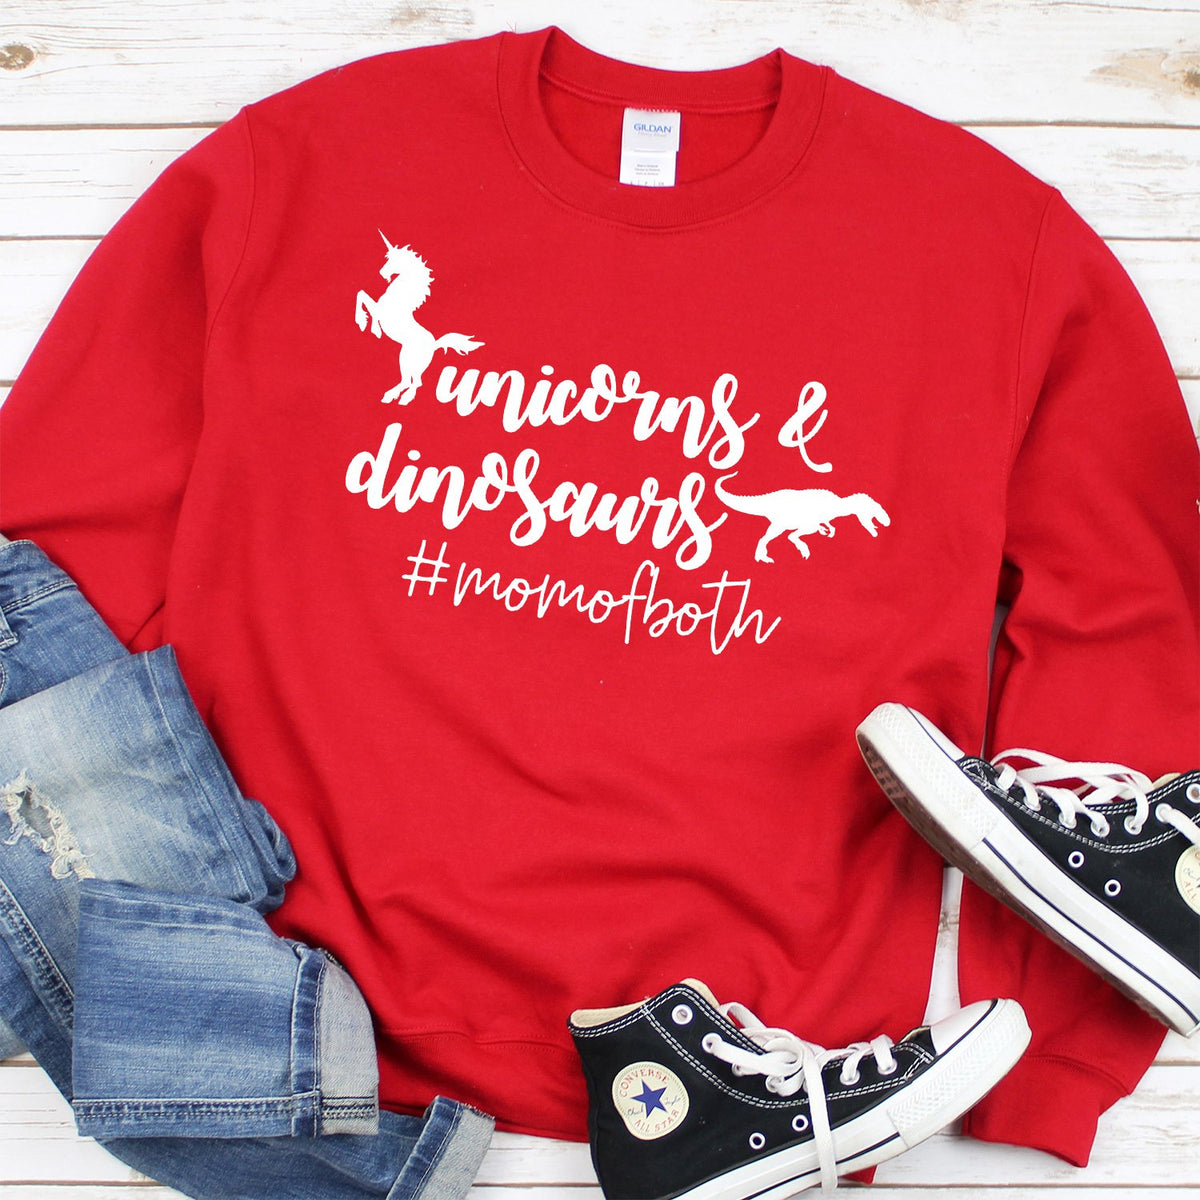 Unicorns &amp; Dinosaurs #MomOfBoth - Long Sleeve Heavy Crewneck Sweatshirt